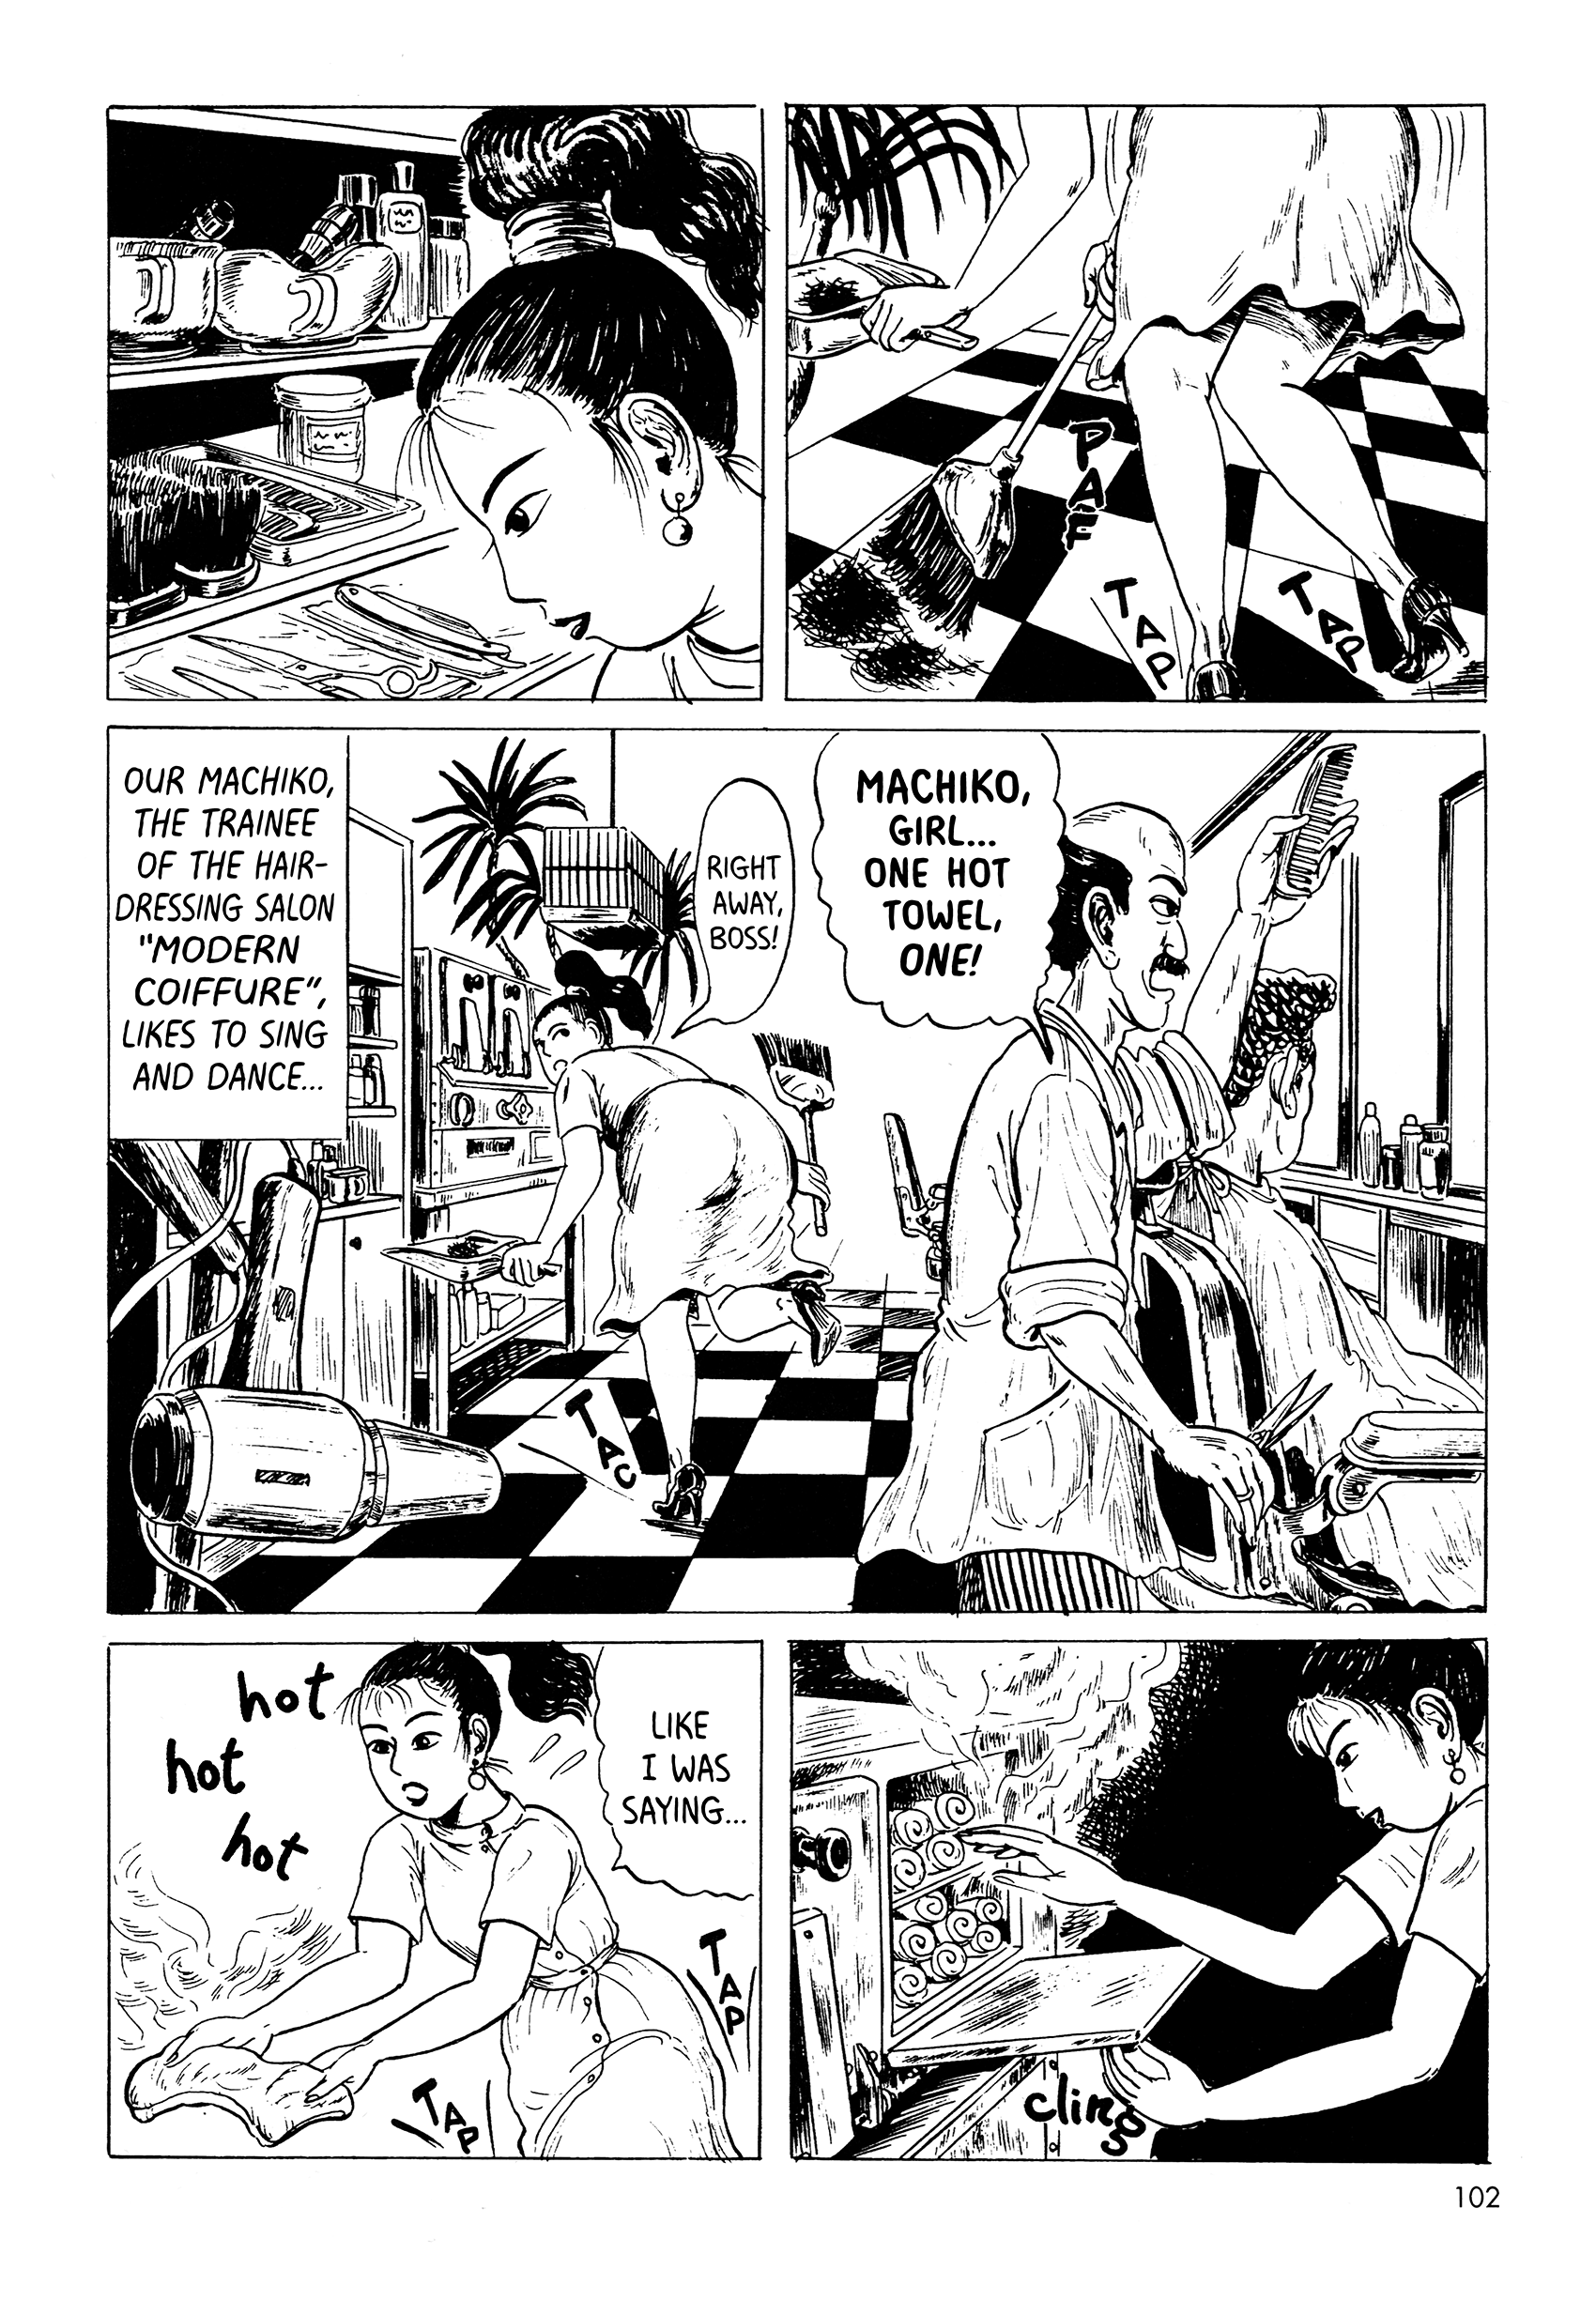 Mizumachi - Page 2